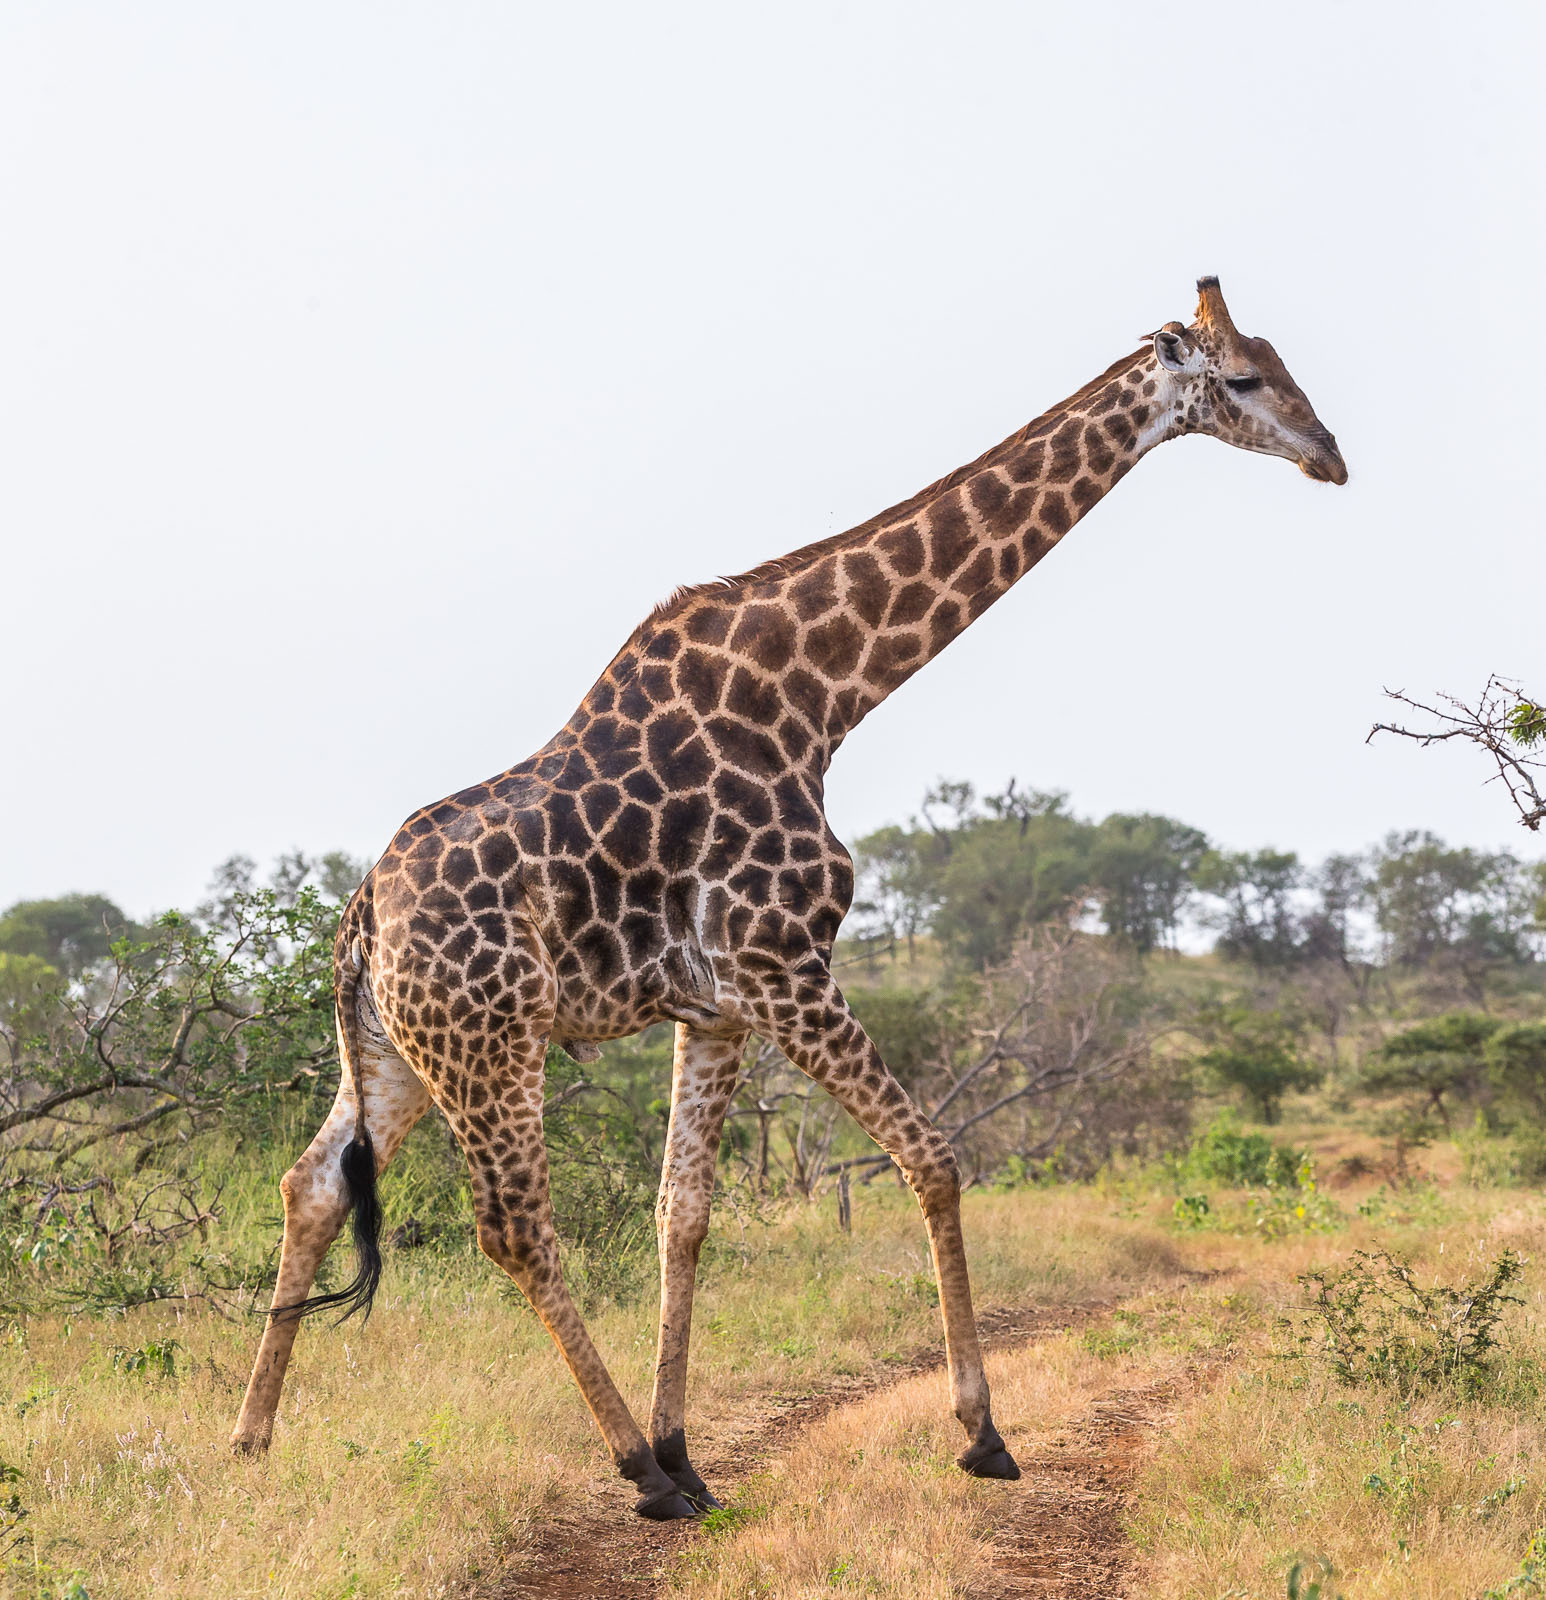 Giraffe crossing